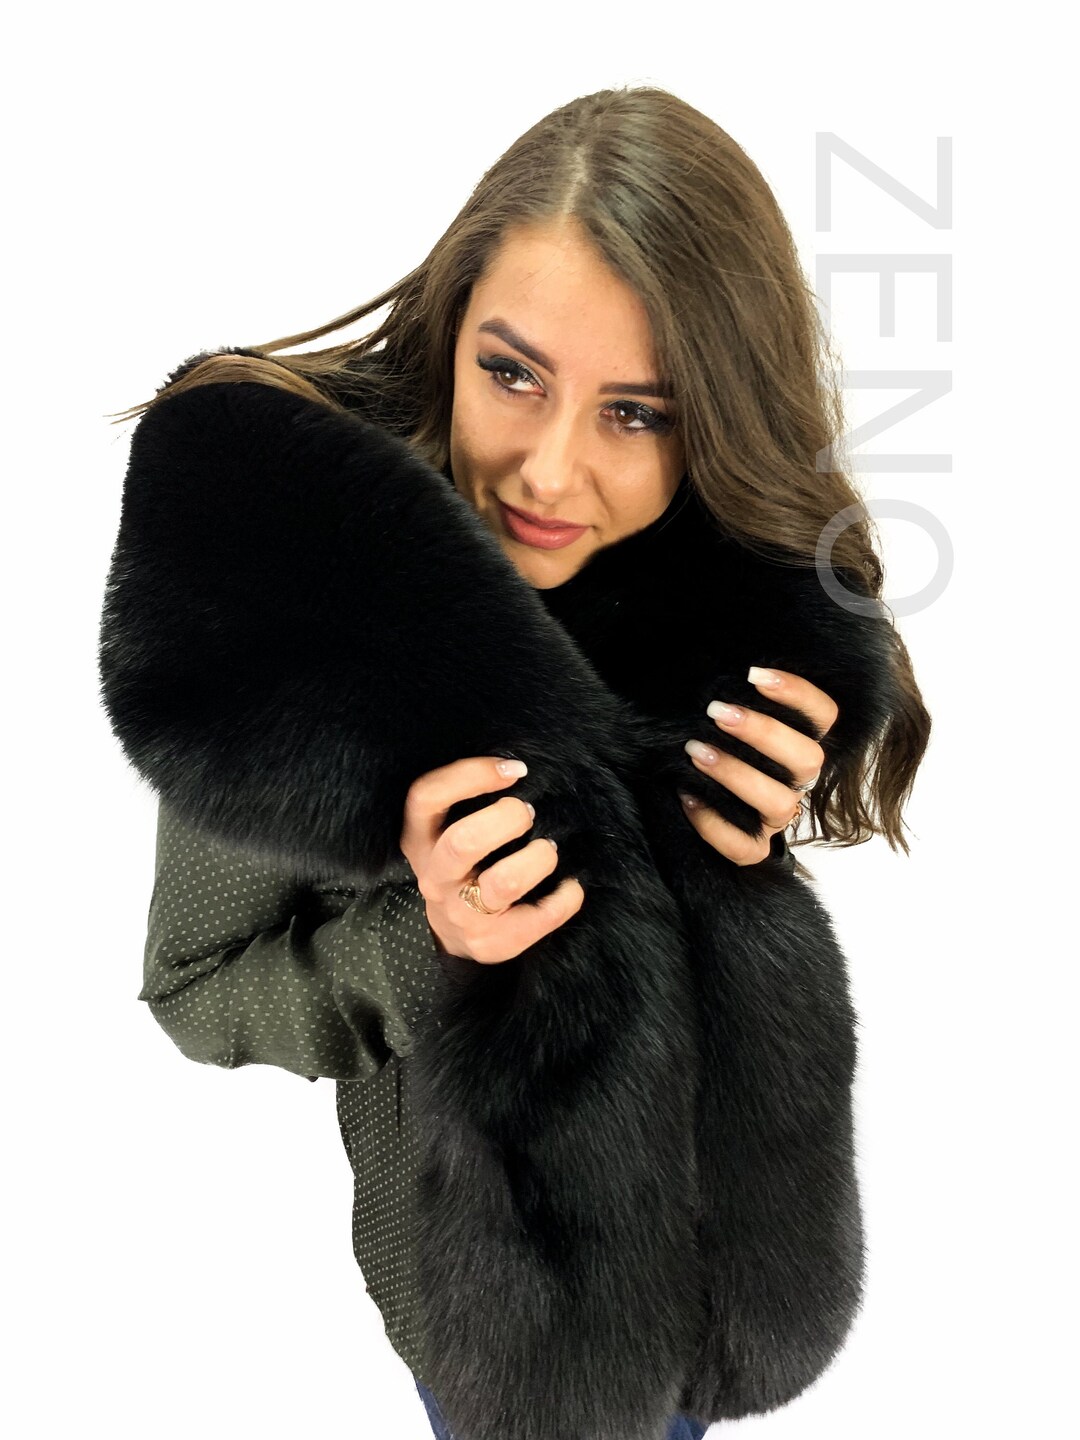 Fox Fur Boa Saga Furs Stole Beige Fur Collar Creamy Fur 70' Inch. (180cm)